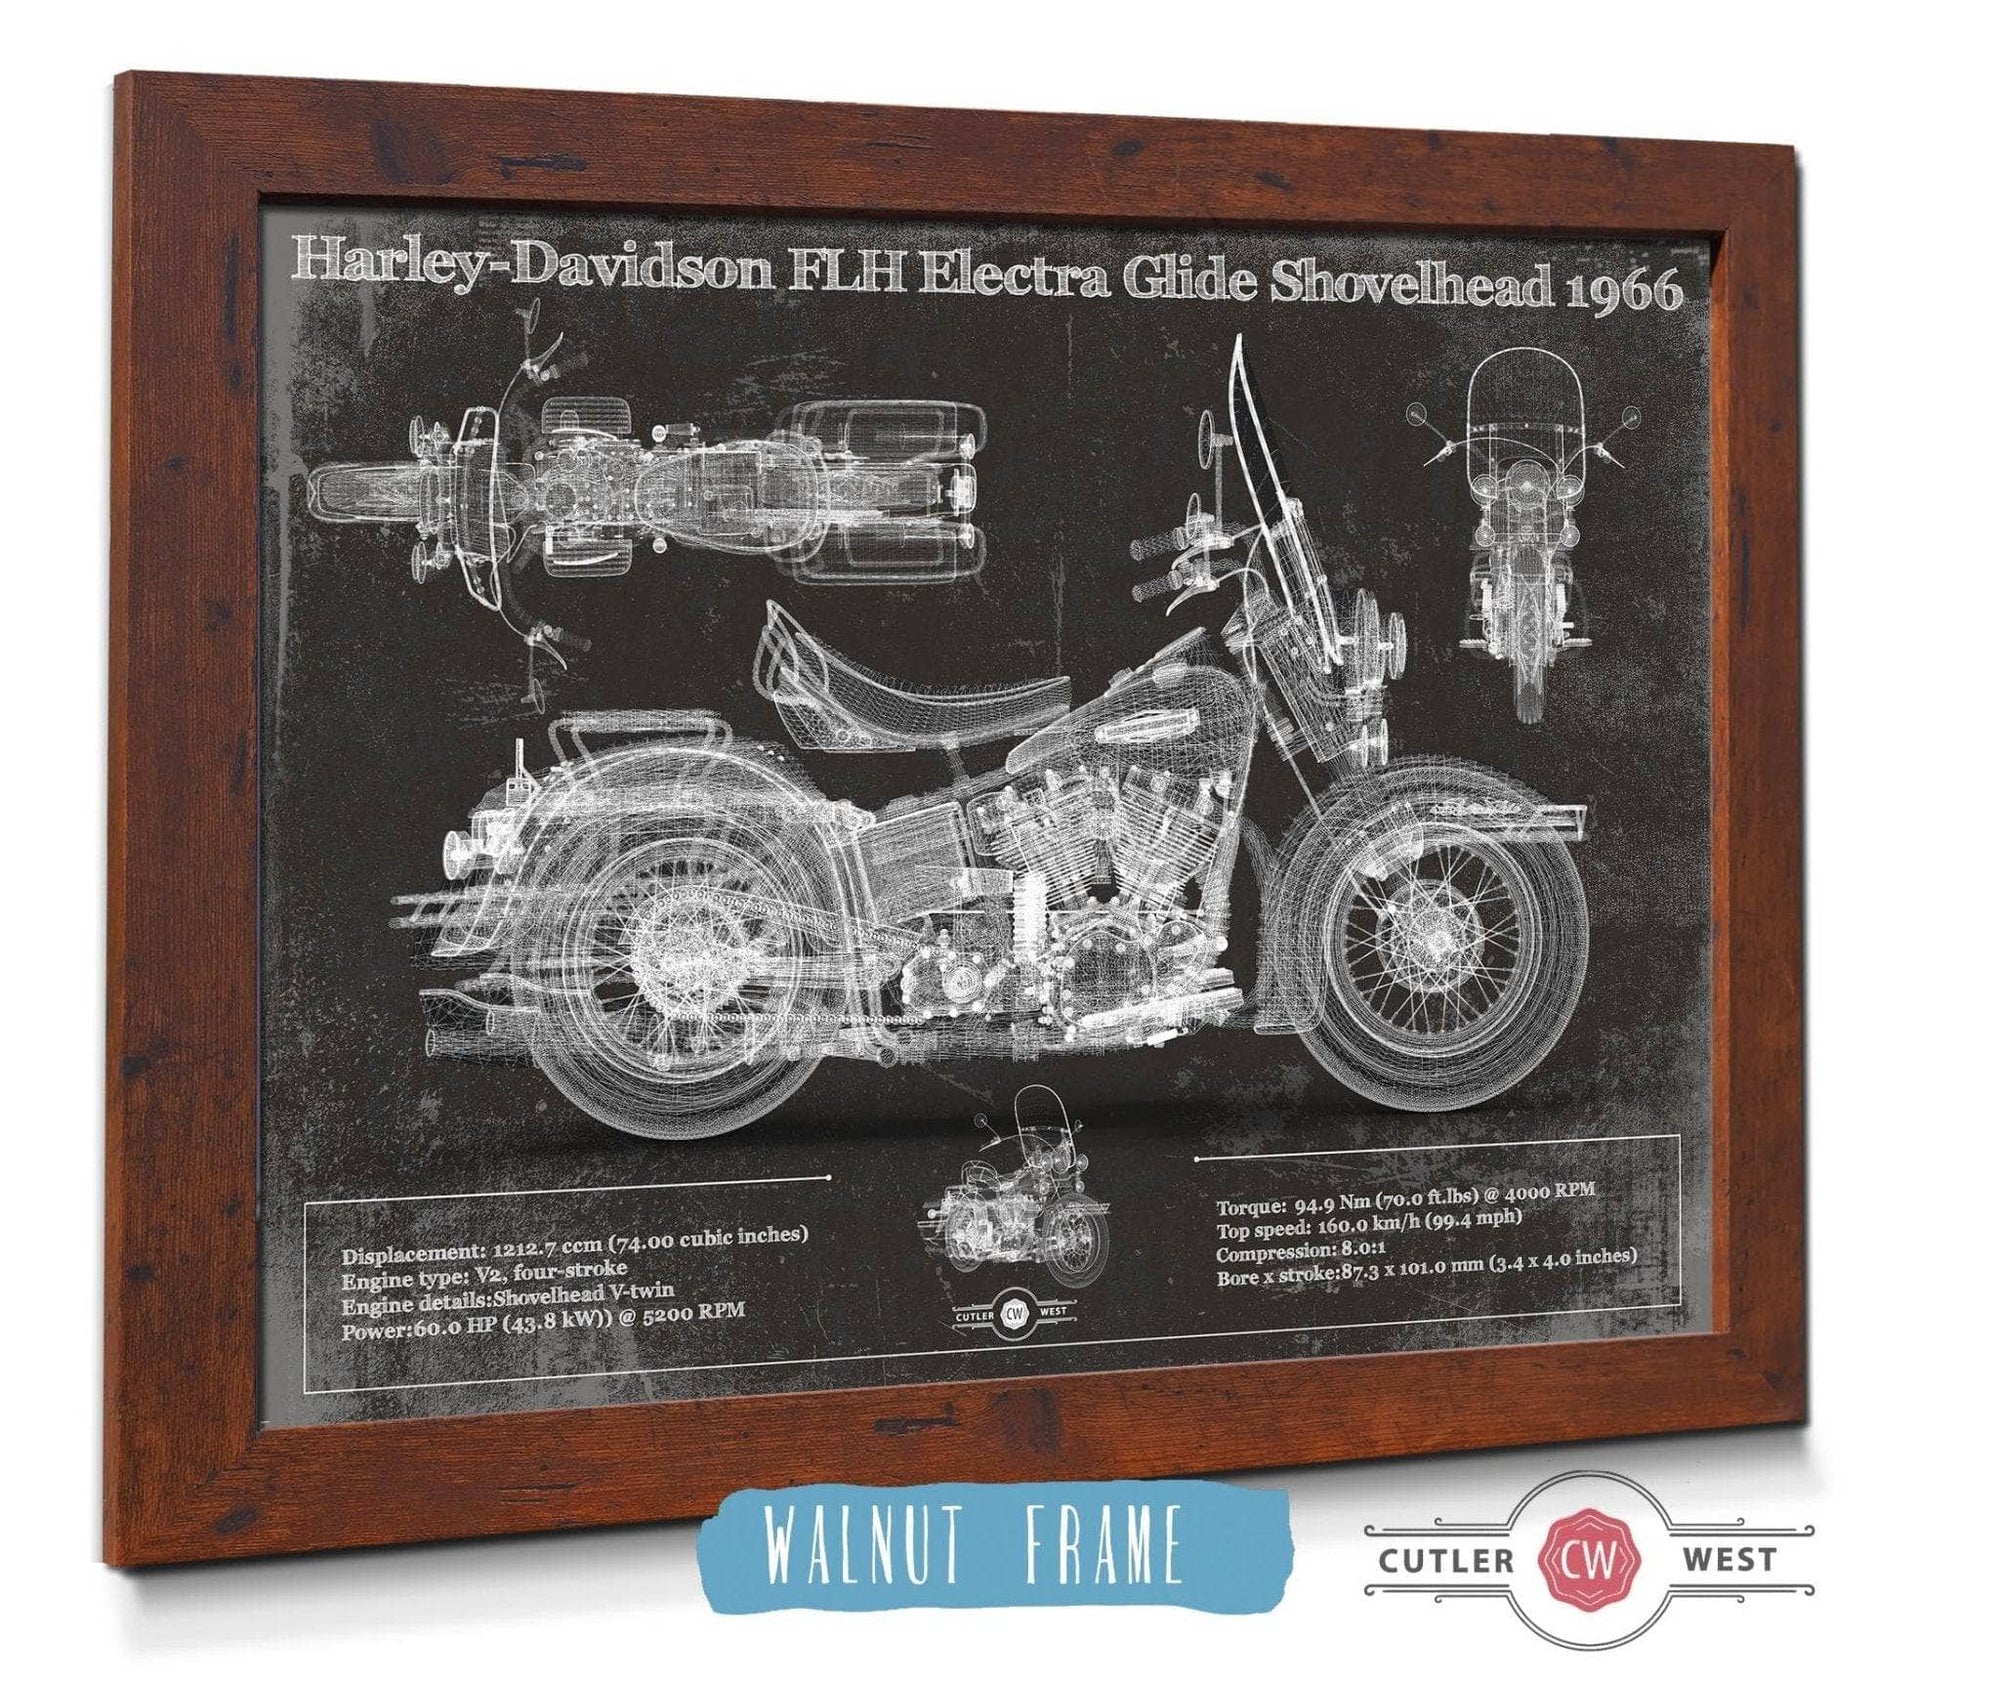 Cutler West 14" x 11" / Walnut Frame Harley-Davidson FLH Electra Glide Shovelhead 1966 Motorcycle Patent Print 845000199_62600